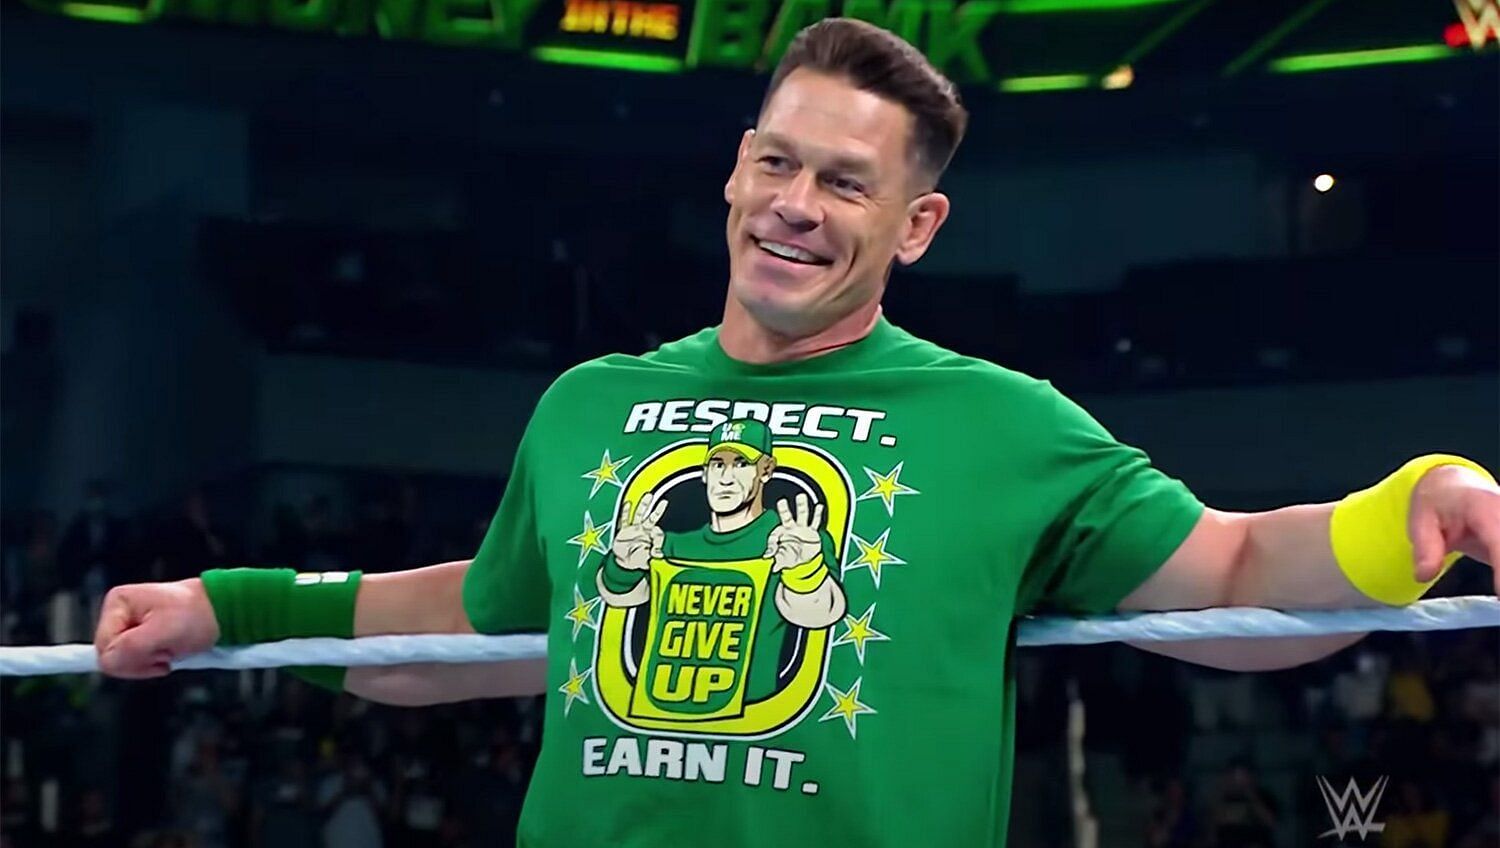 John Cena was last seen in WWE at SummerSlam